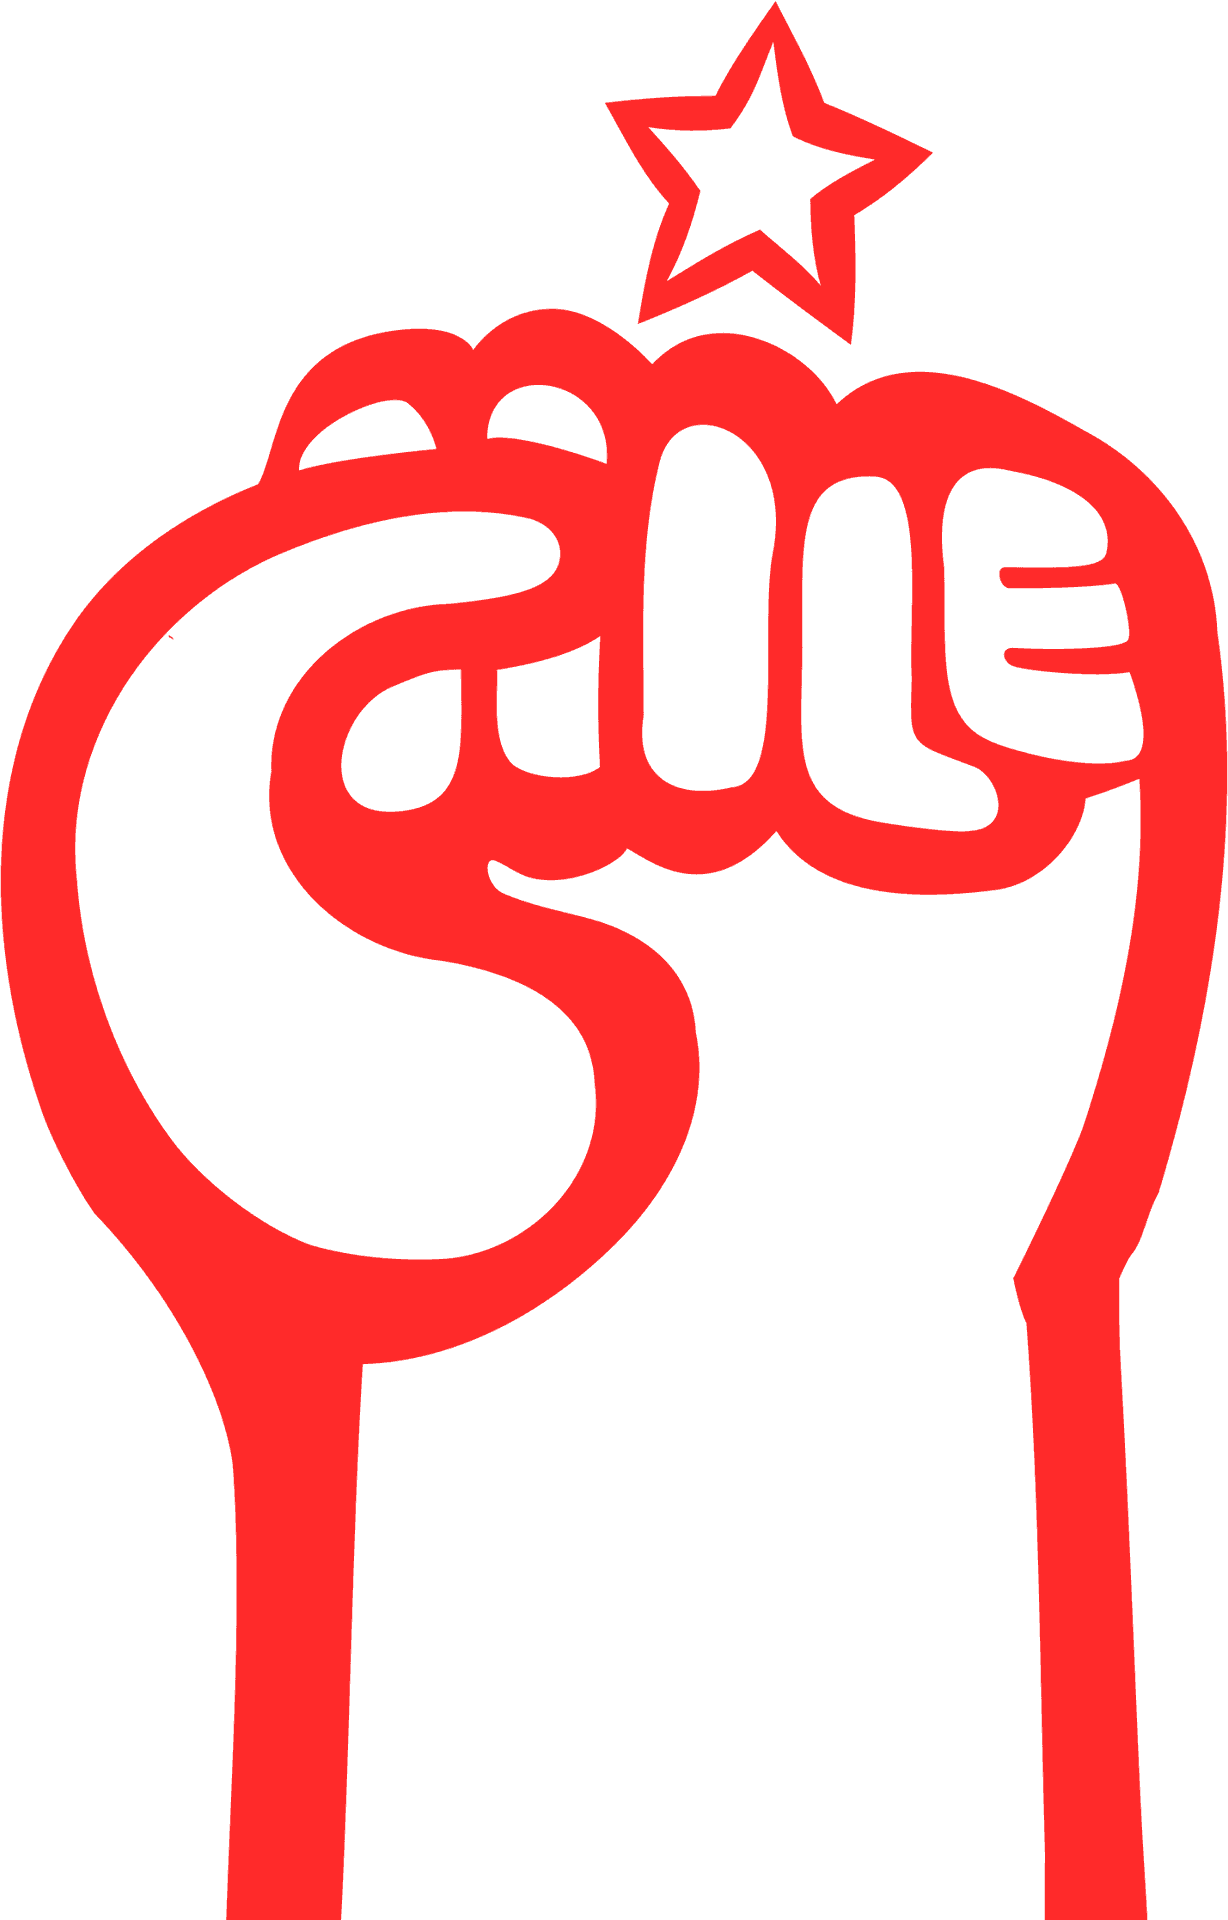 Chilean Socialist Party Logo PNG image